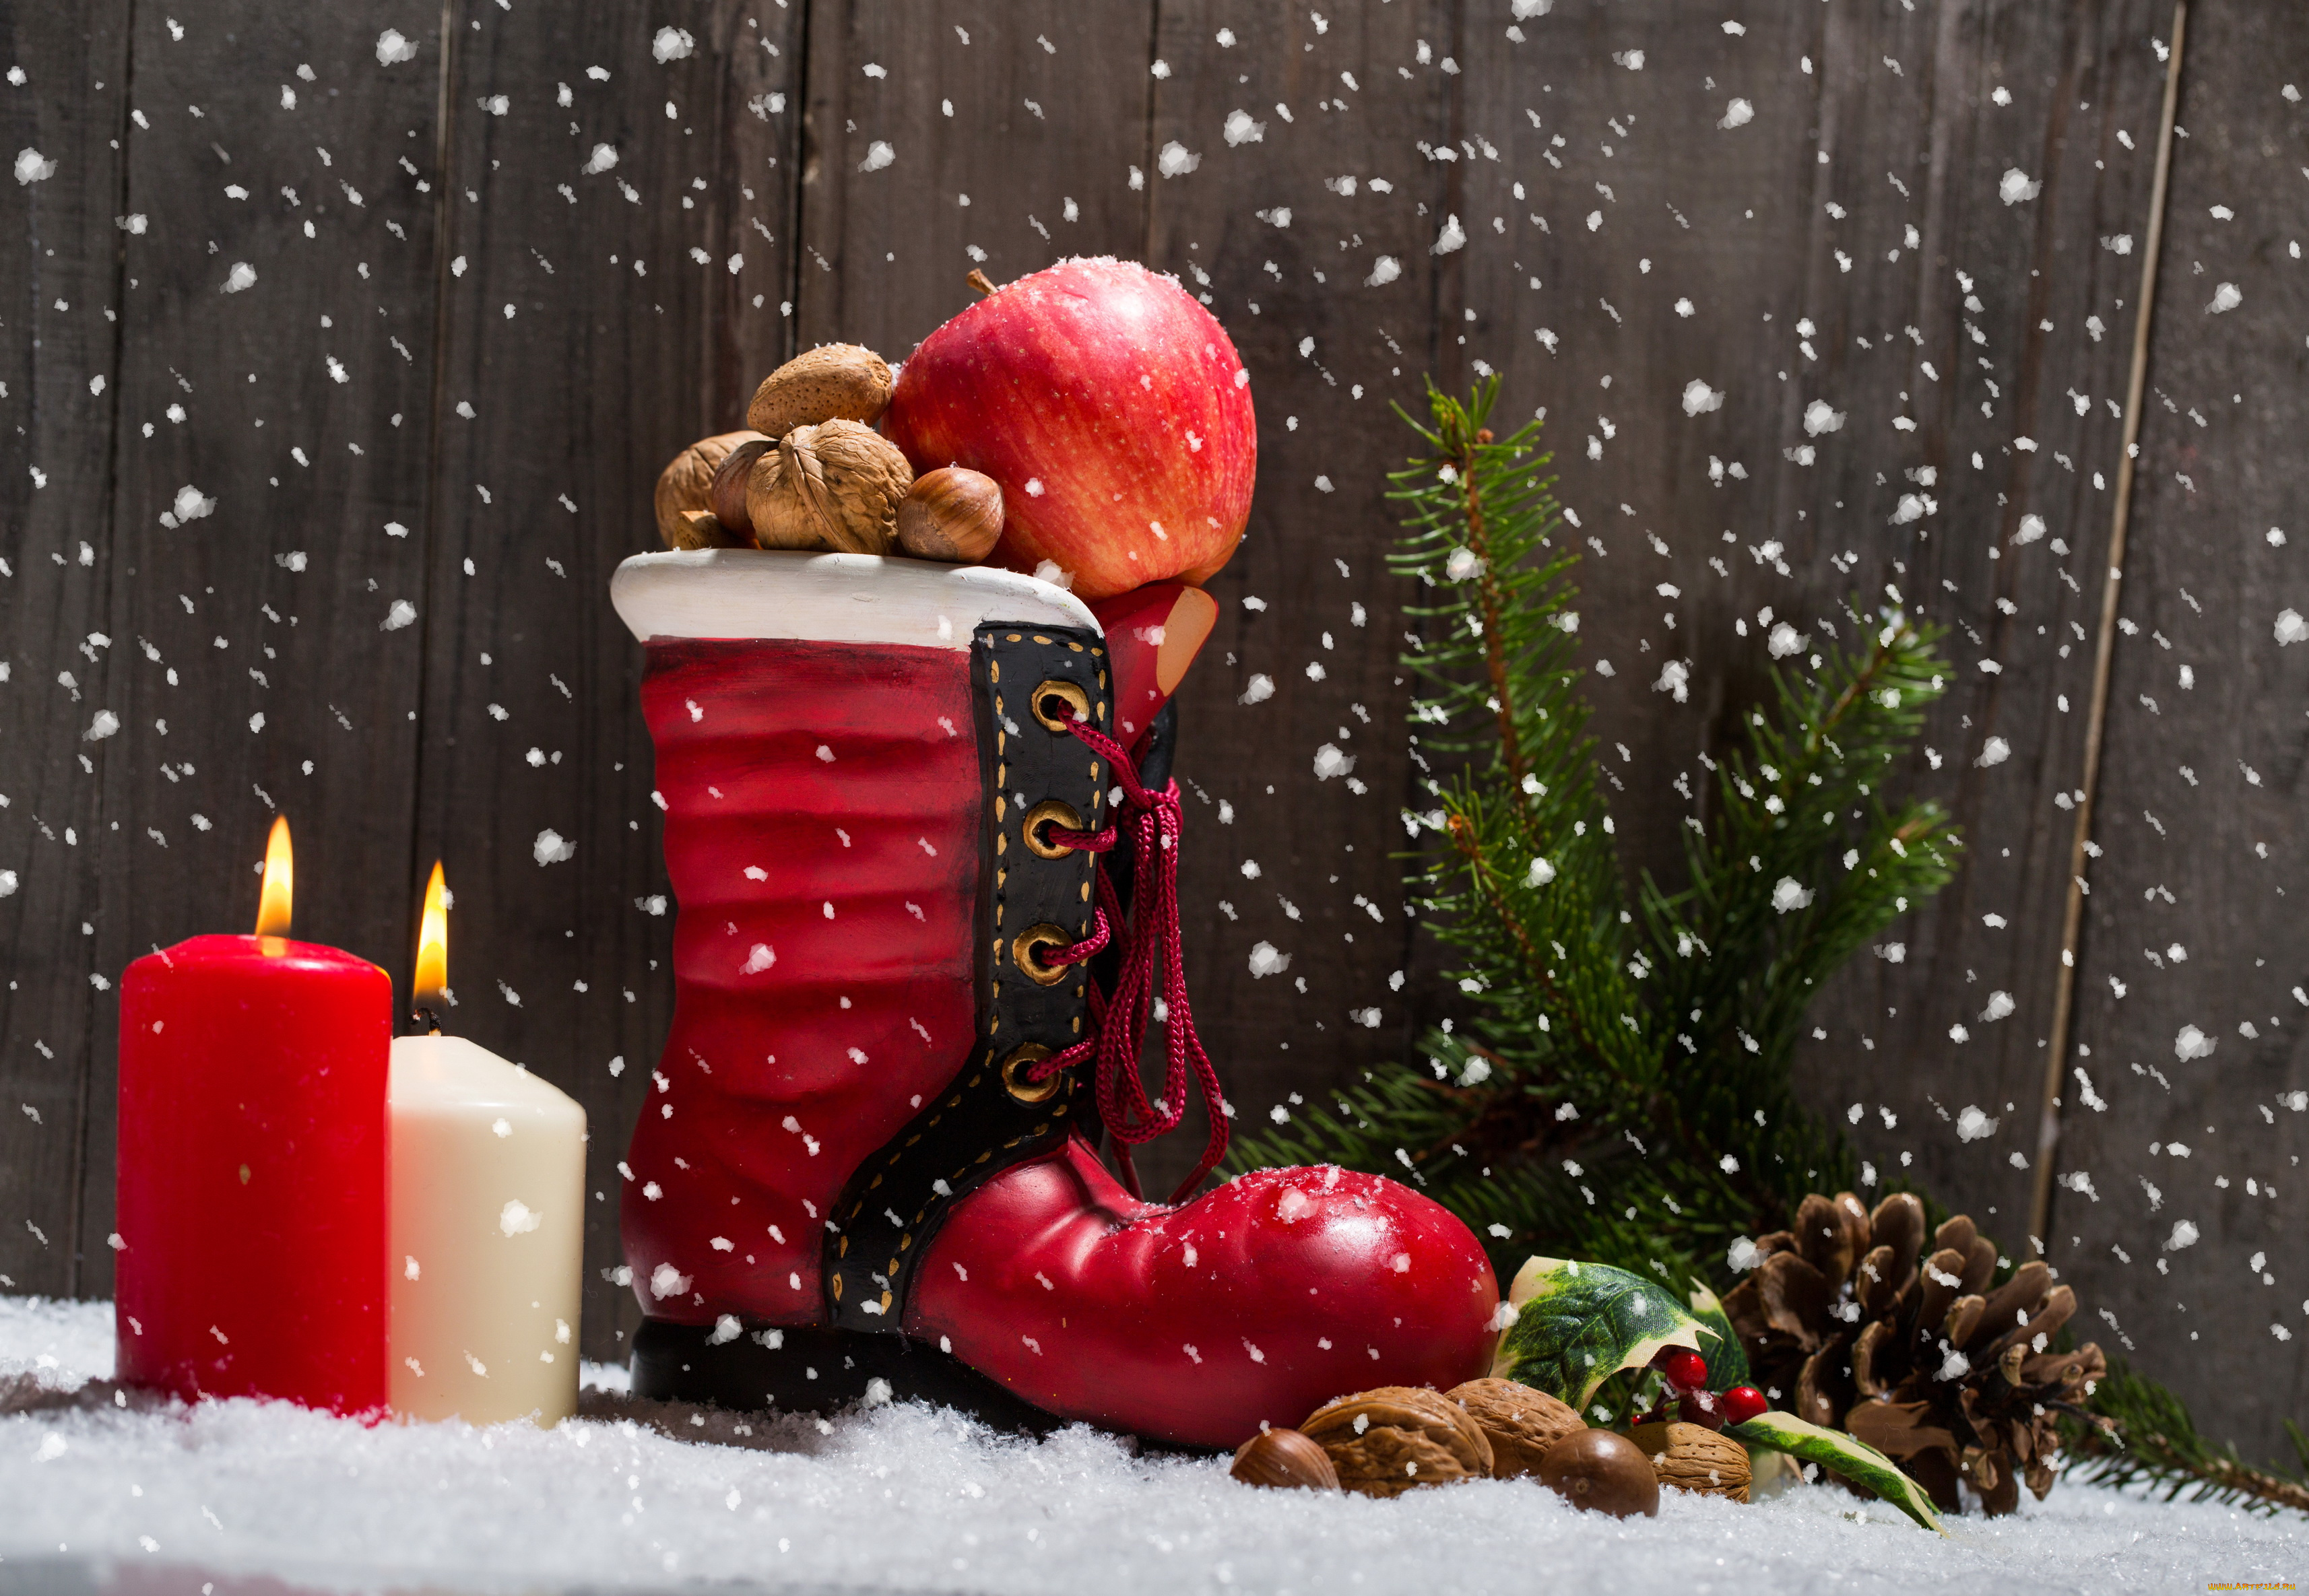 праздничные, подарки, и, коробочки, шишки, свечи, снег, елка, орехи, яблоко, сапог